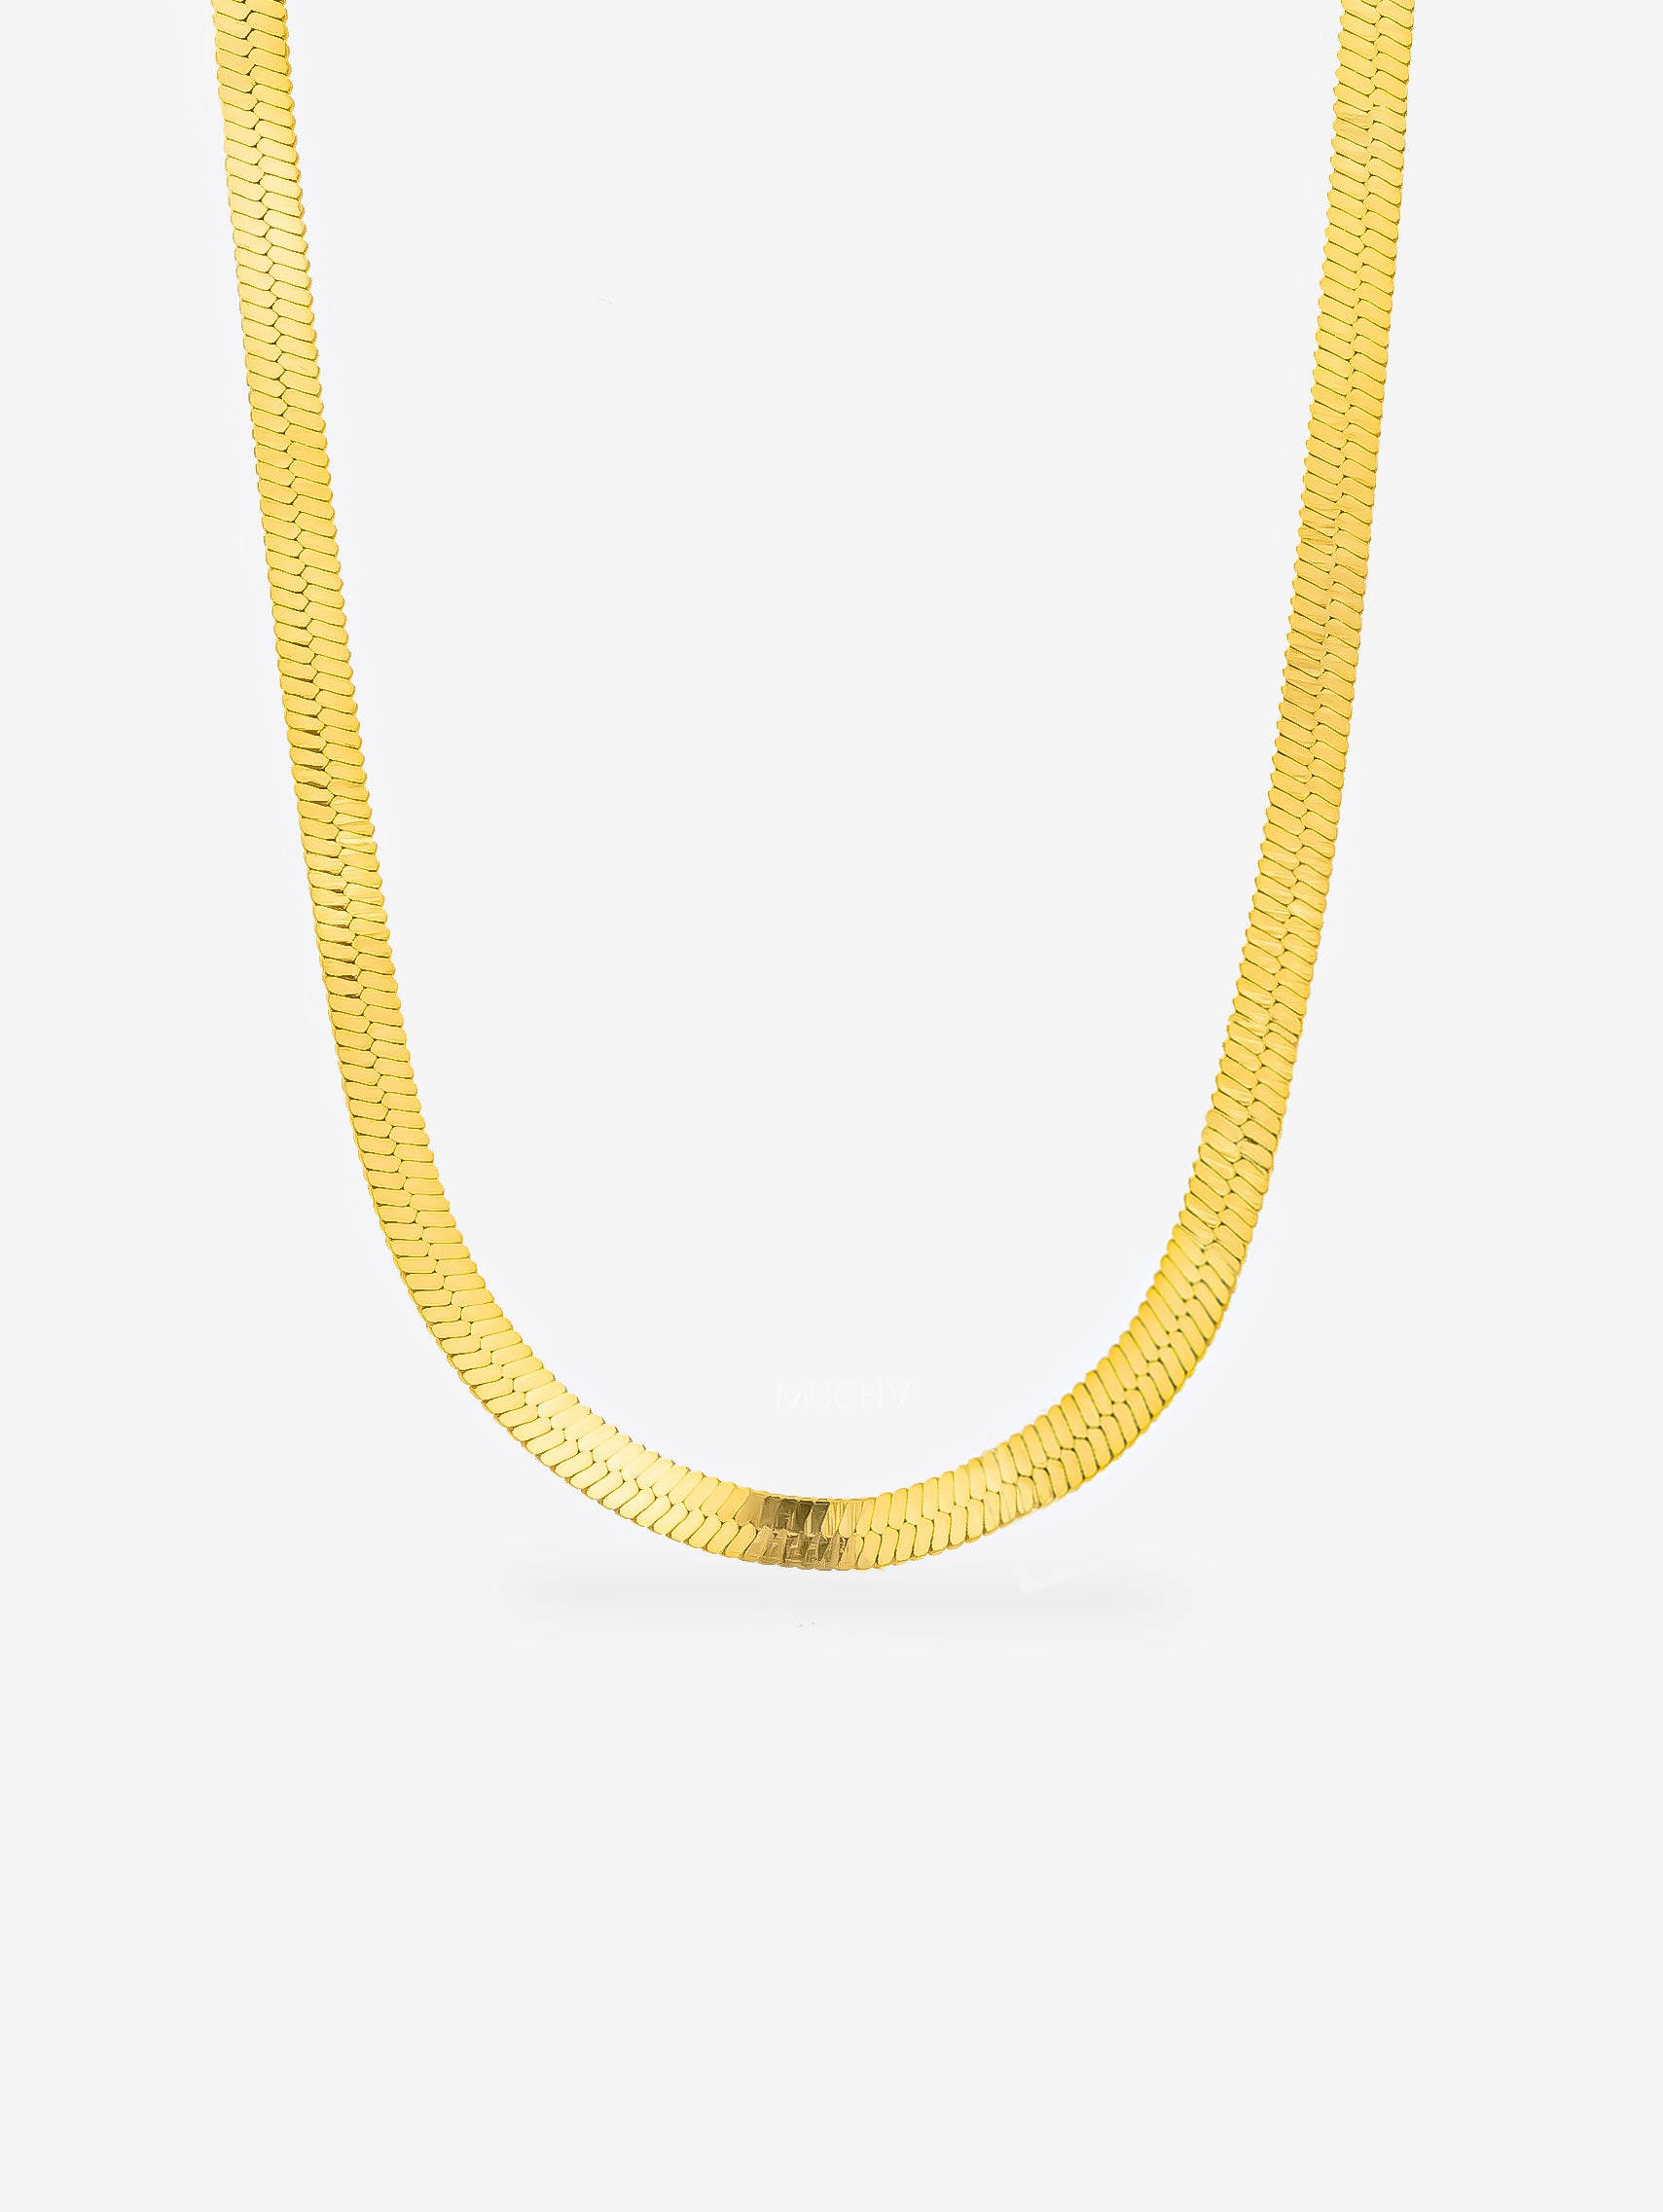 Gold Thin Herringbone Chain Necklace